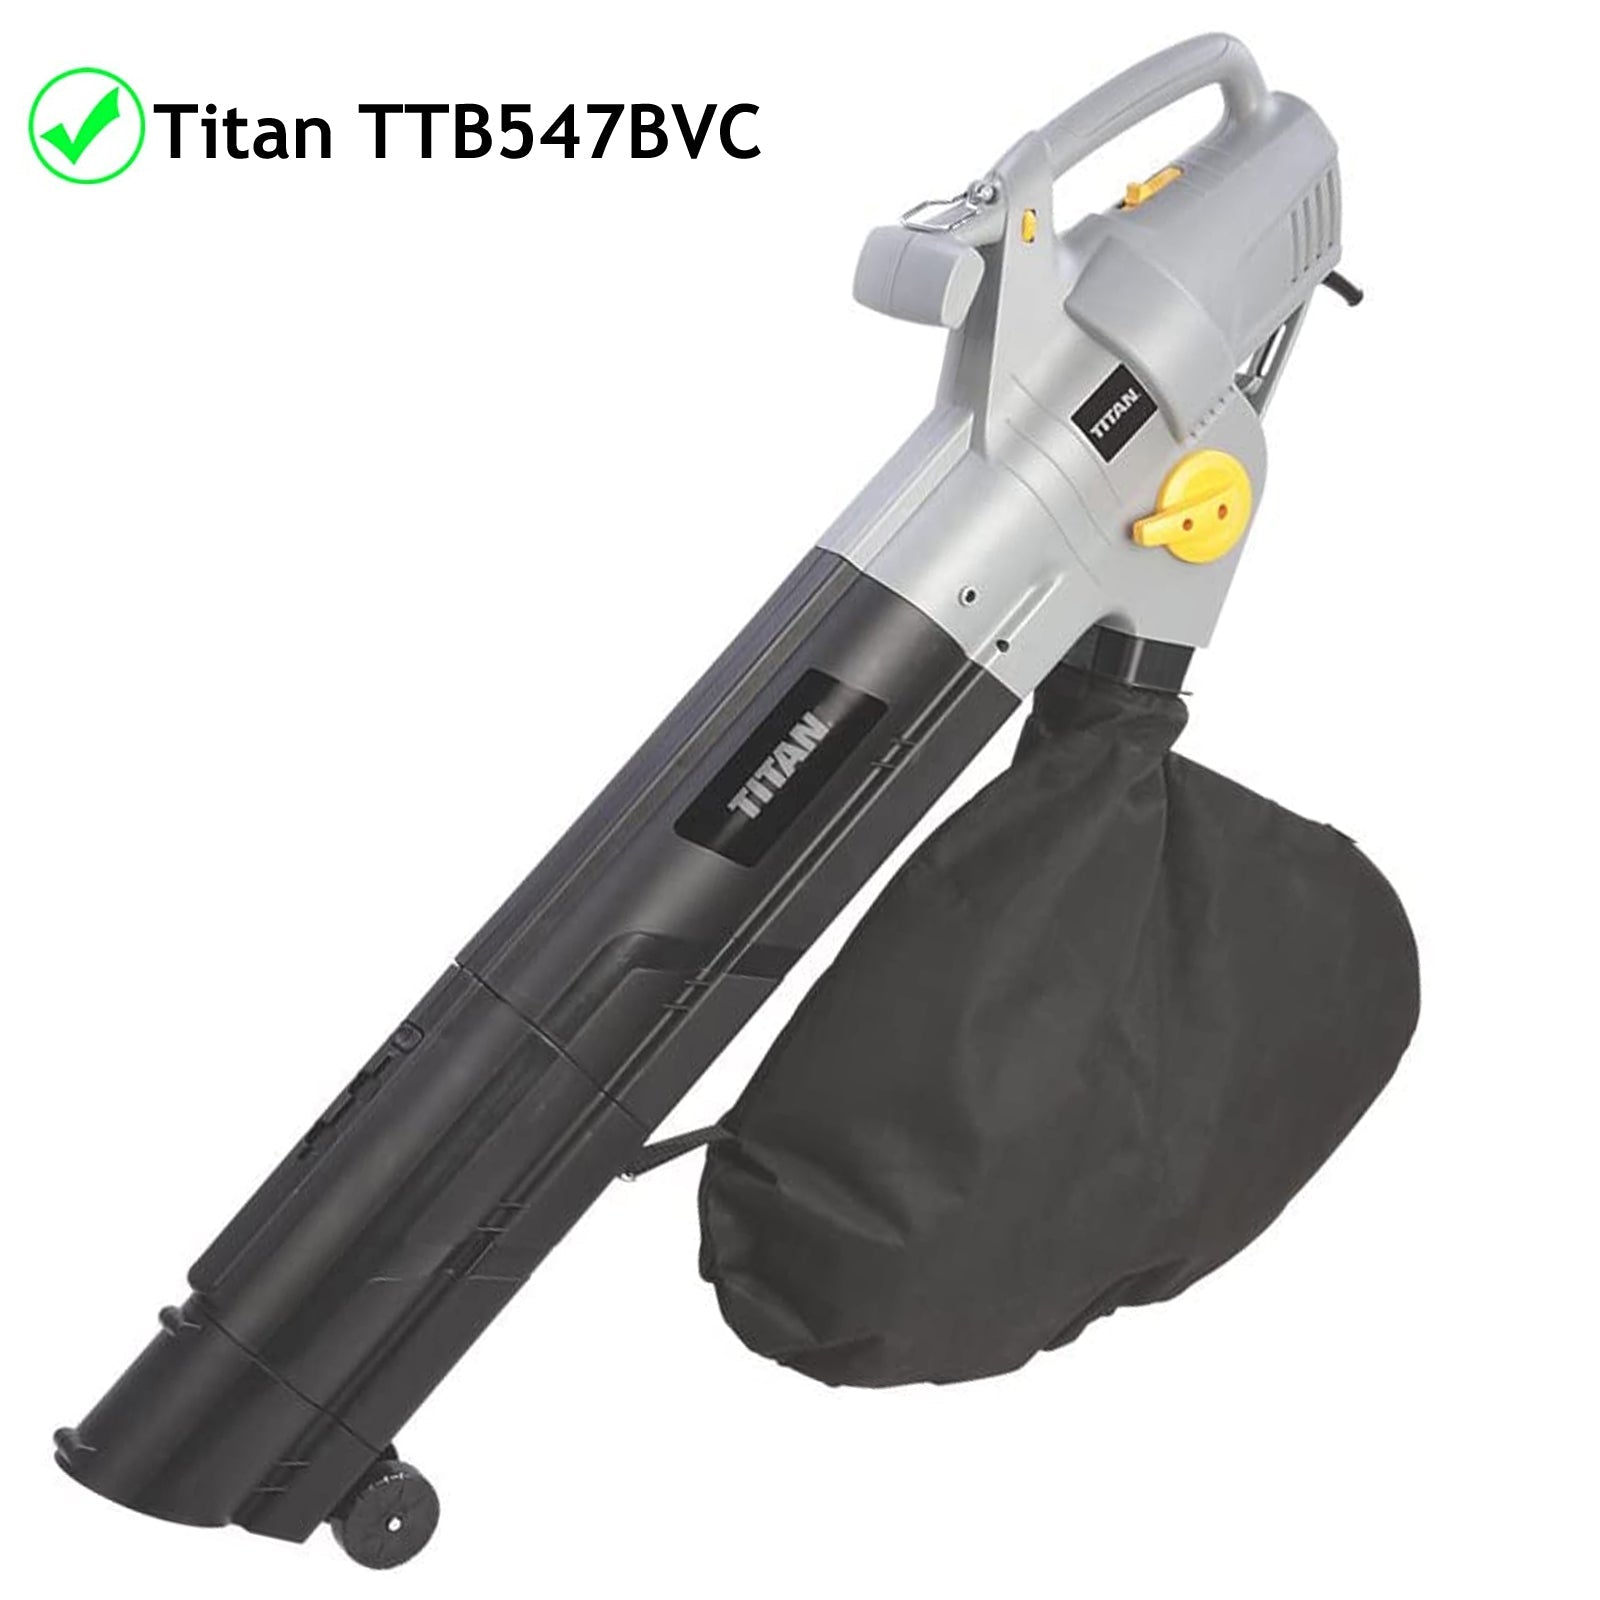 Debris Collection Bag Sack for TITAN TTB547BVC Garden Vac Leaf Blower Vacuum x 2